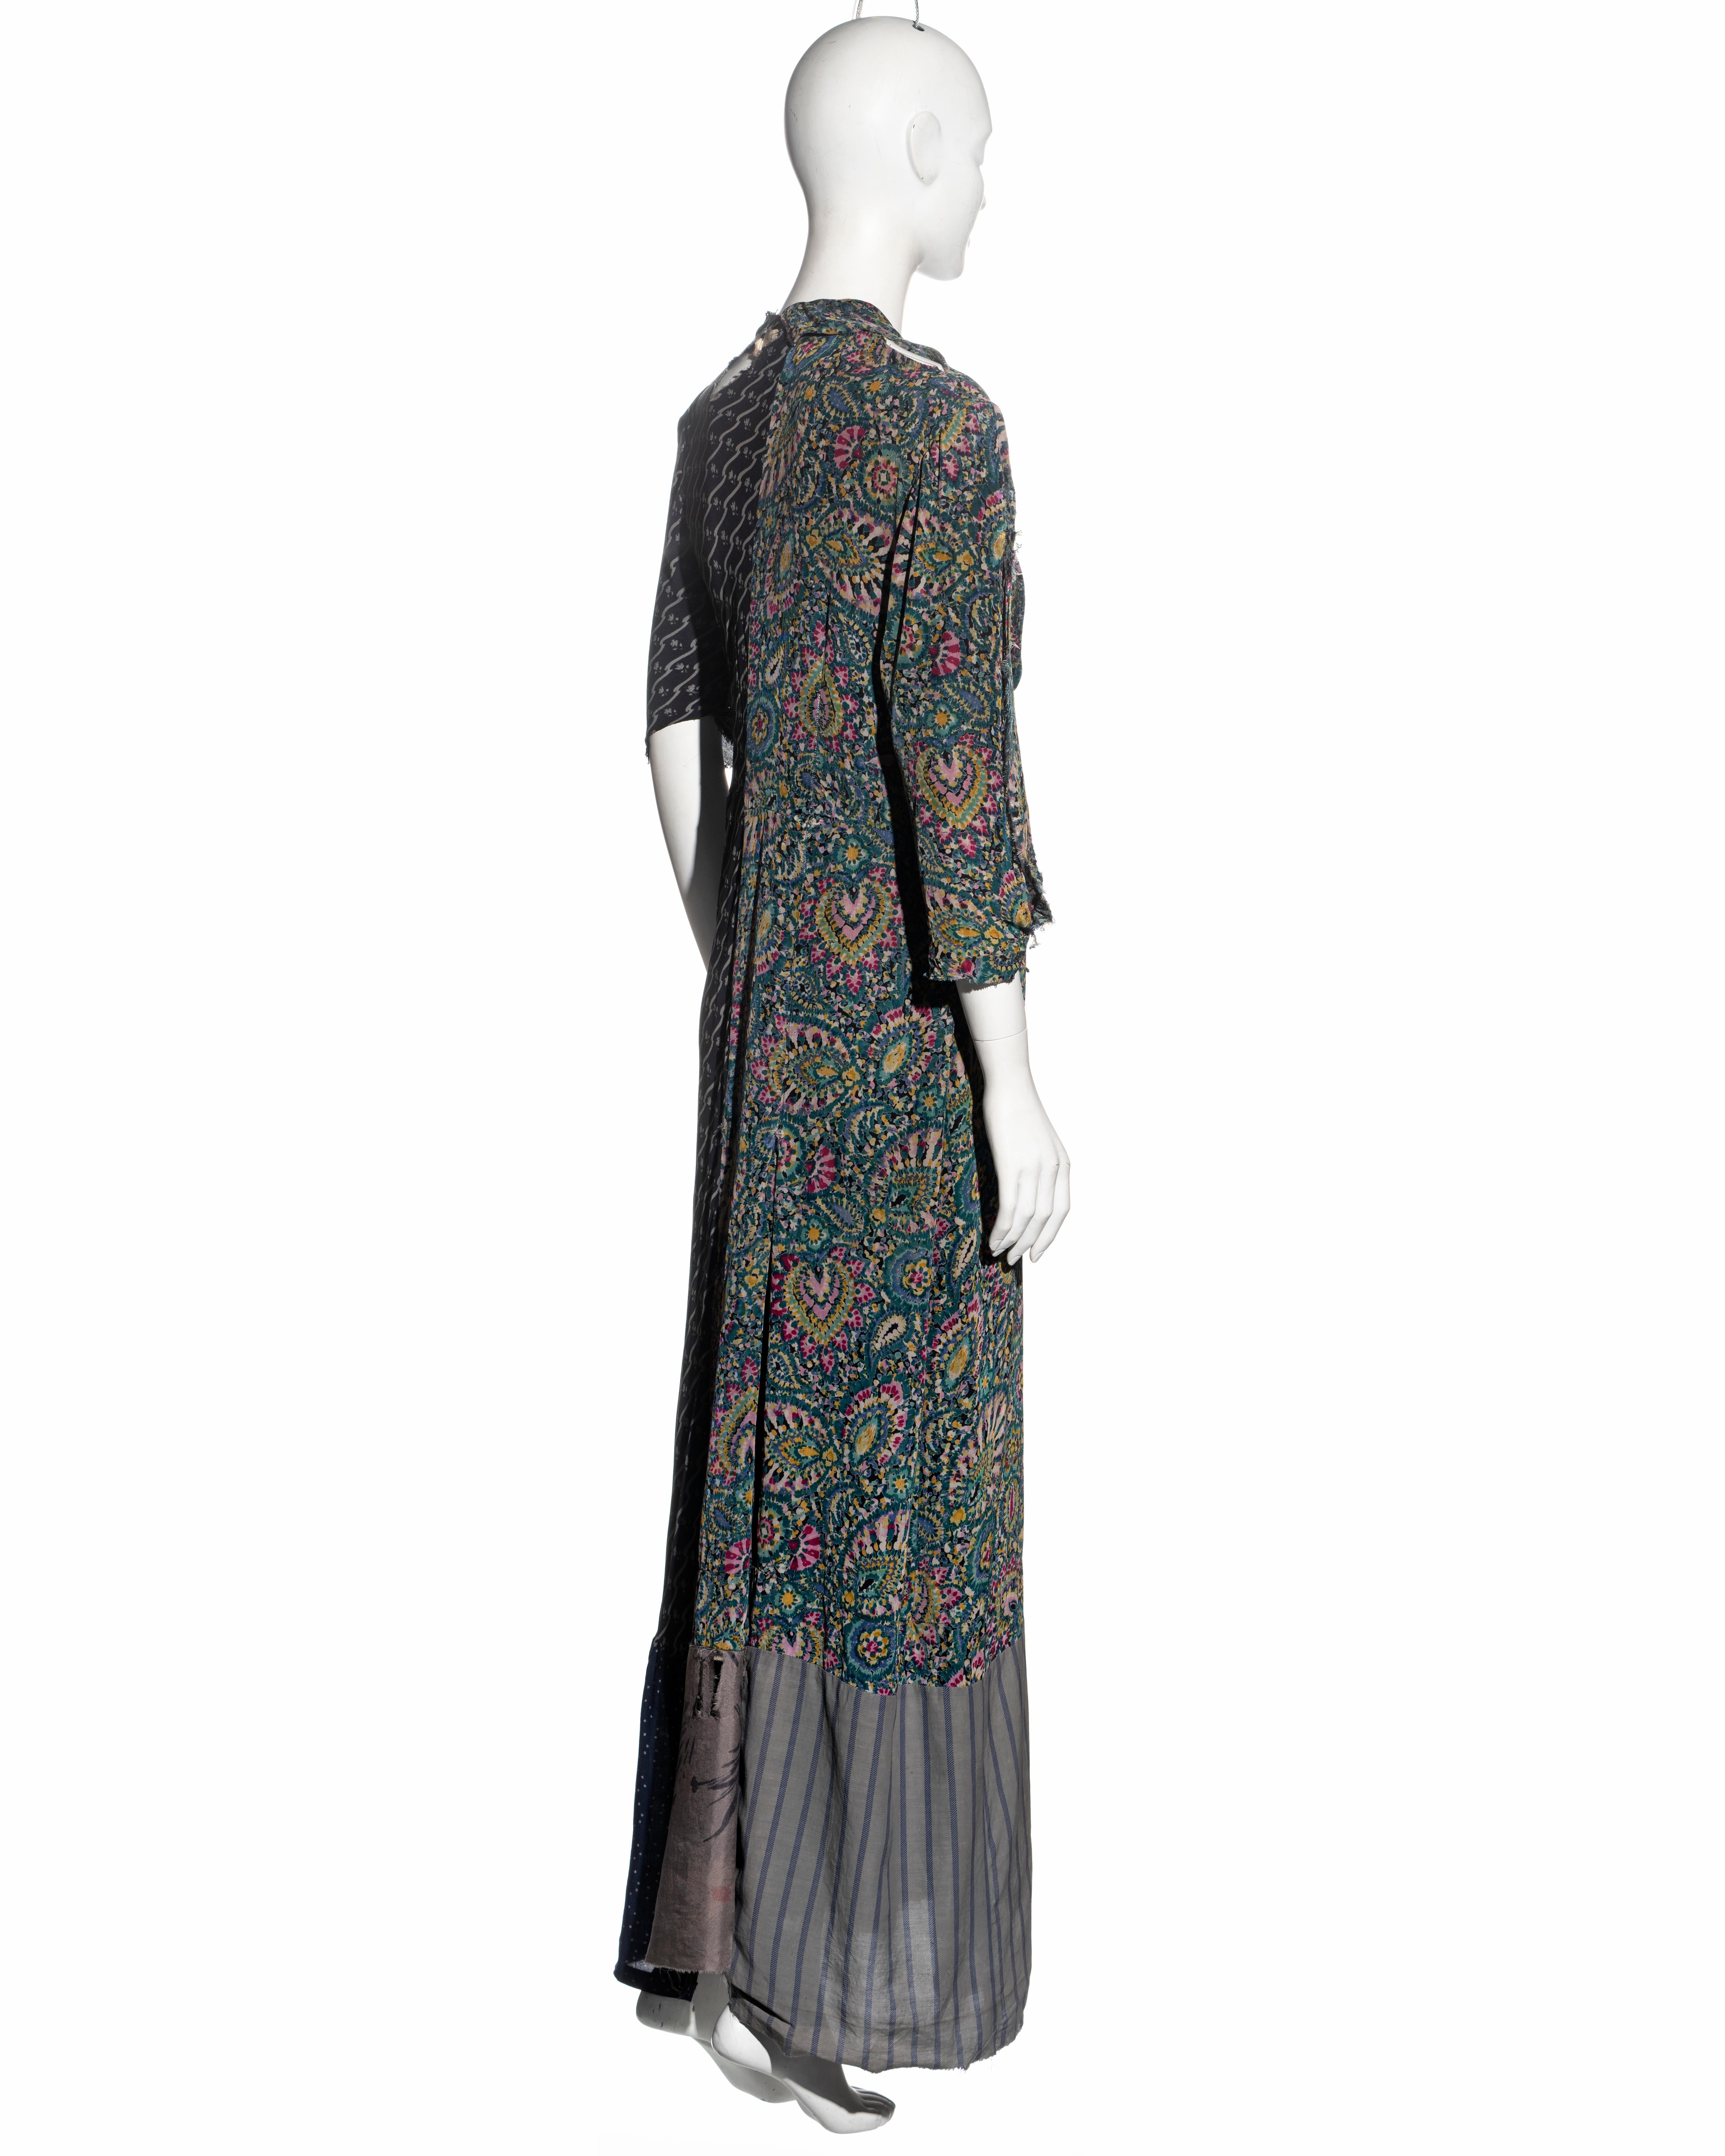 Martin Margiela artisanal dress made from reclaimed vintage dresses, fw 1993 For Sale 1